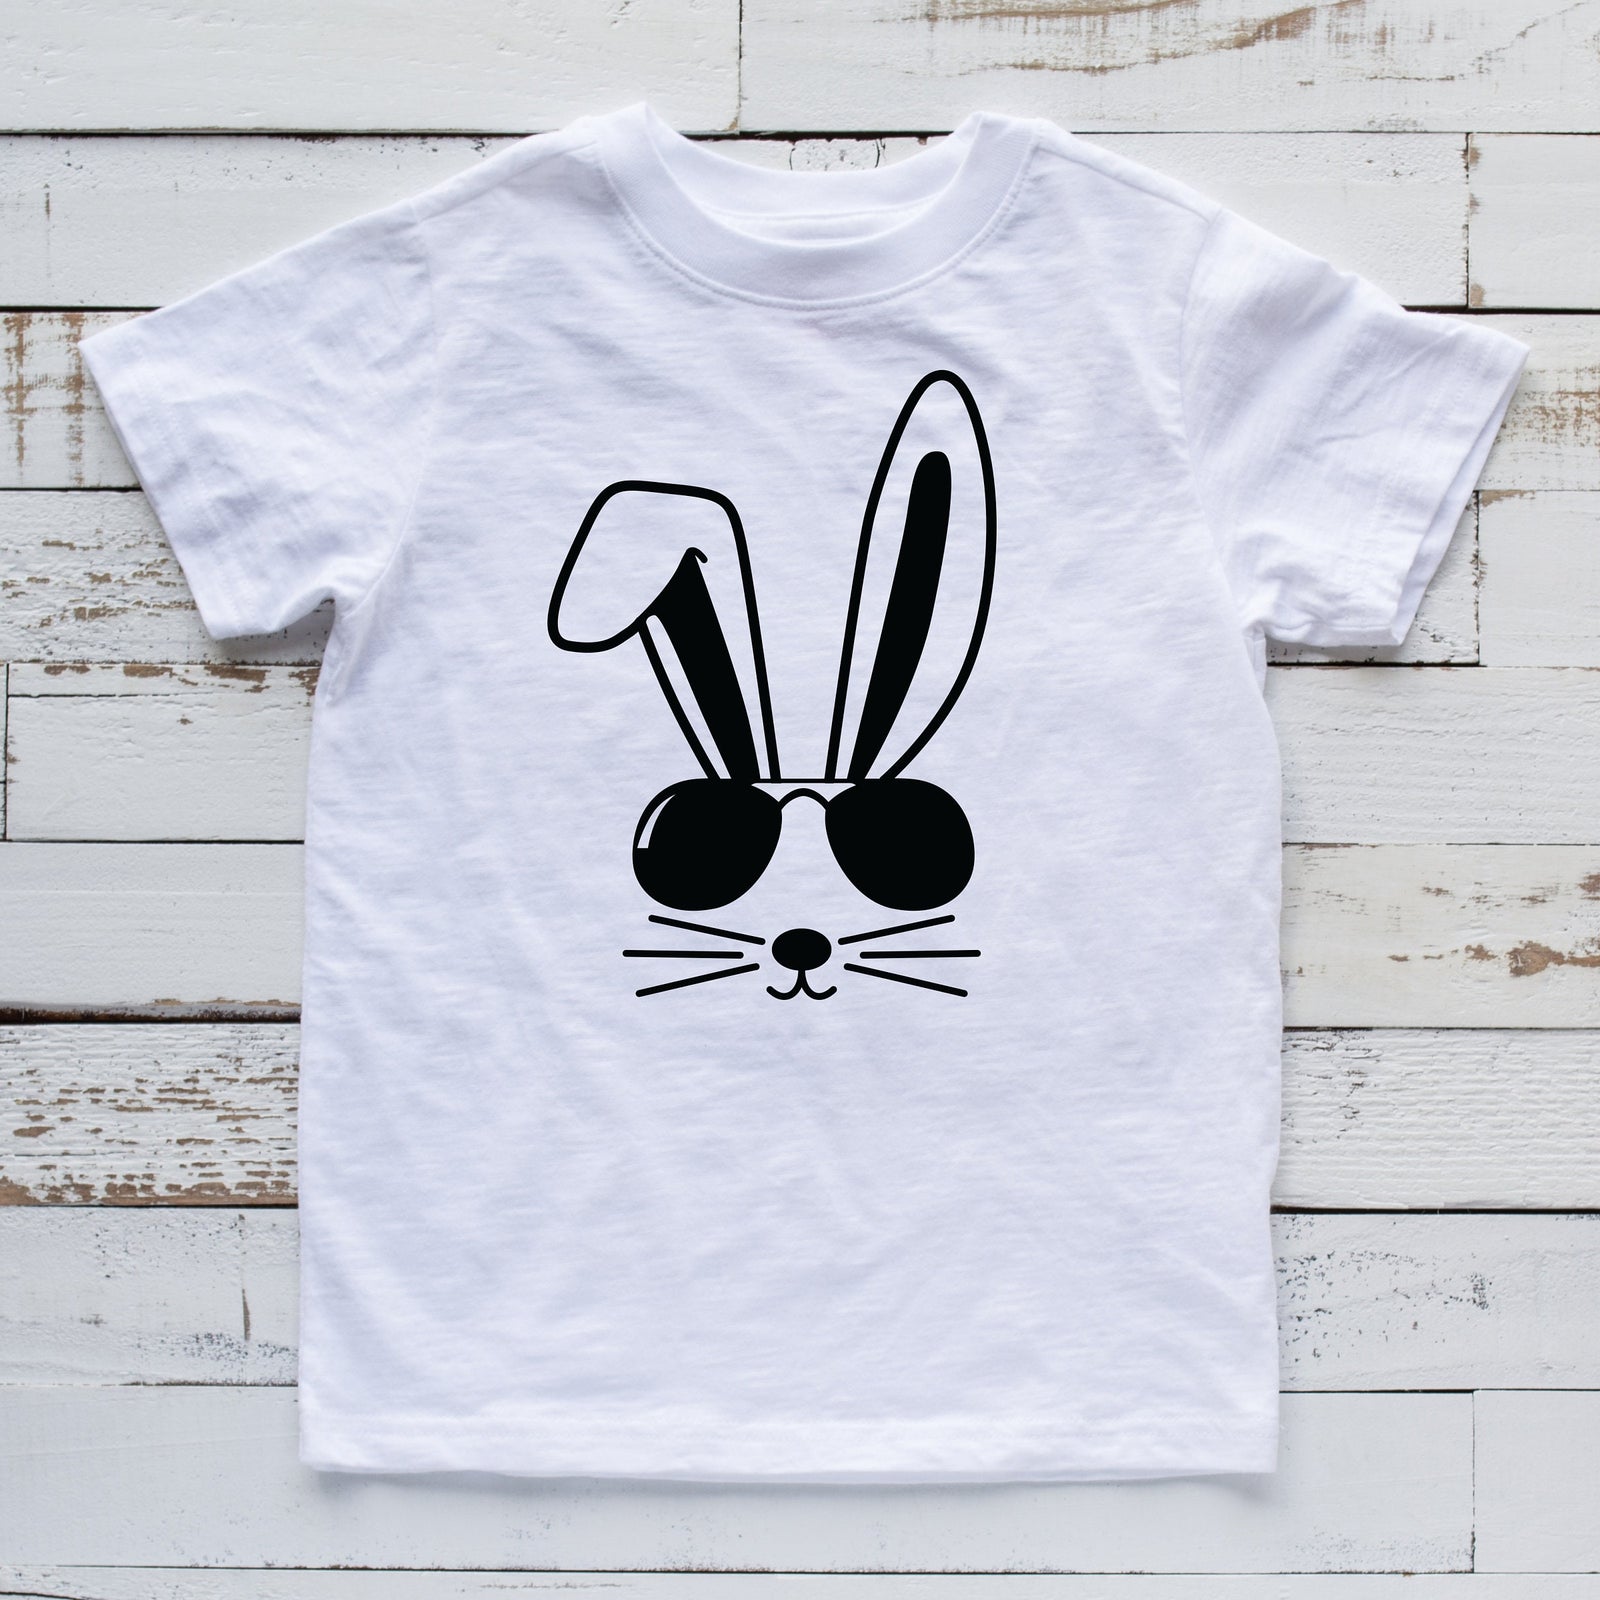 Cute Bunny Shirt - Kids Easter Shirt - Cute Rabbit Shirt - Bunny Face